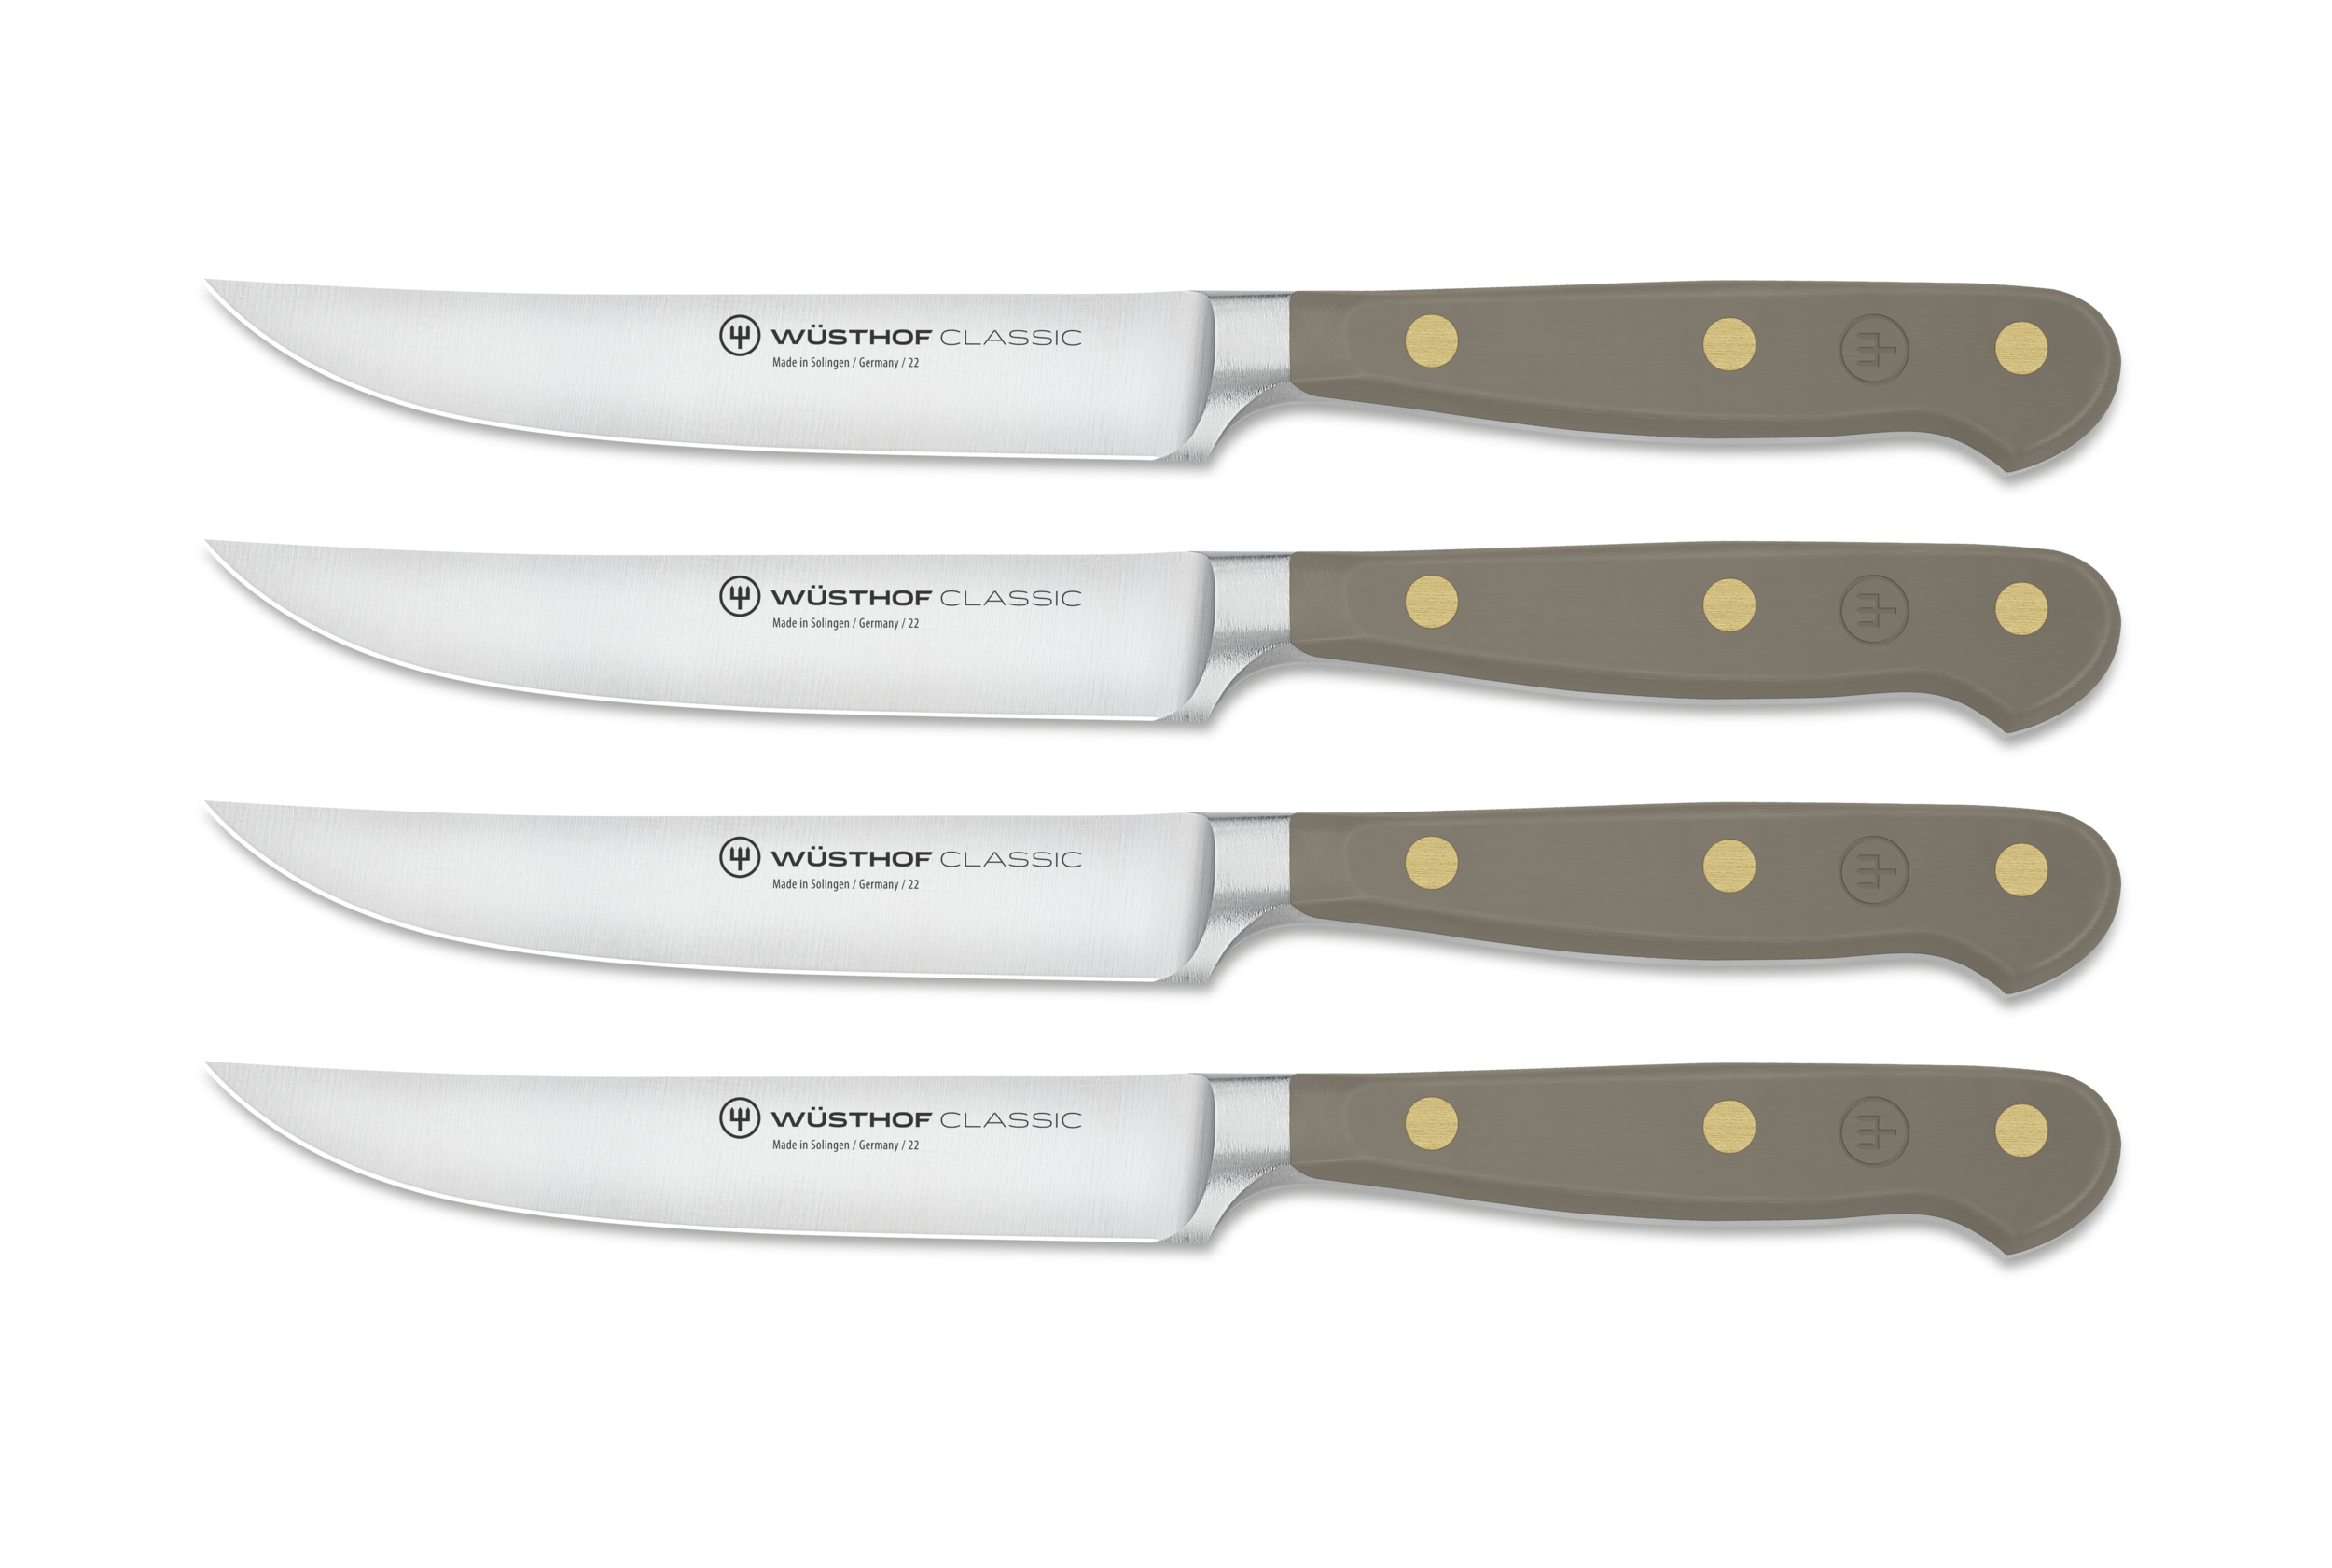 Wusthof Stainless Steel 4 Piece Steak Knife Set - KnifeCenter - 8460 -  Discontinued